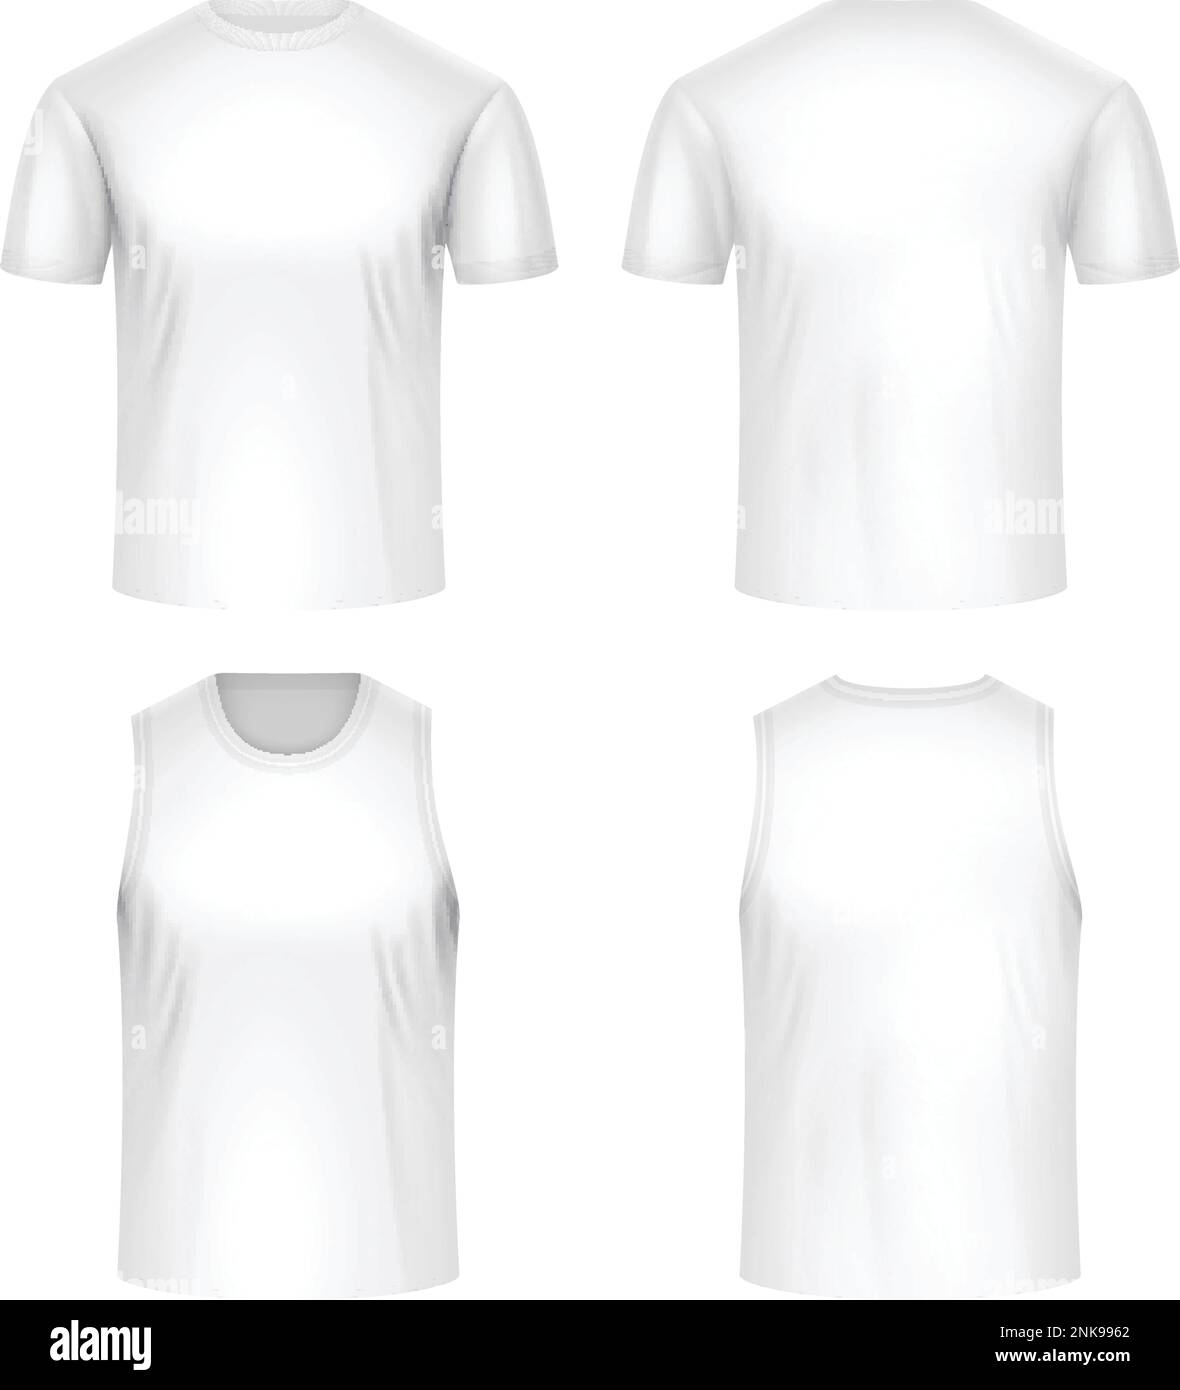 Realistic sport uniform white mockup set of short sleeved and ...